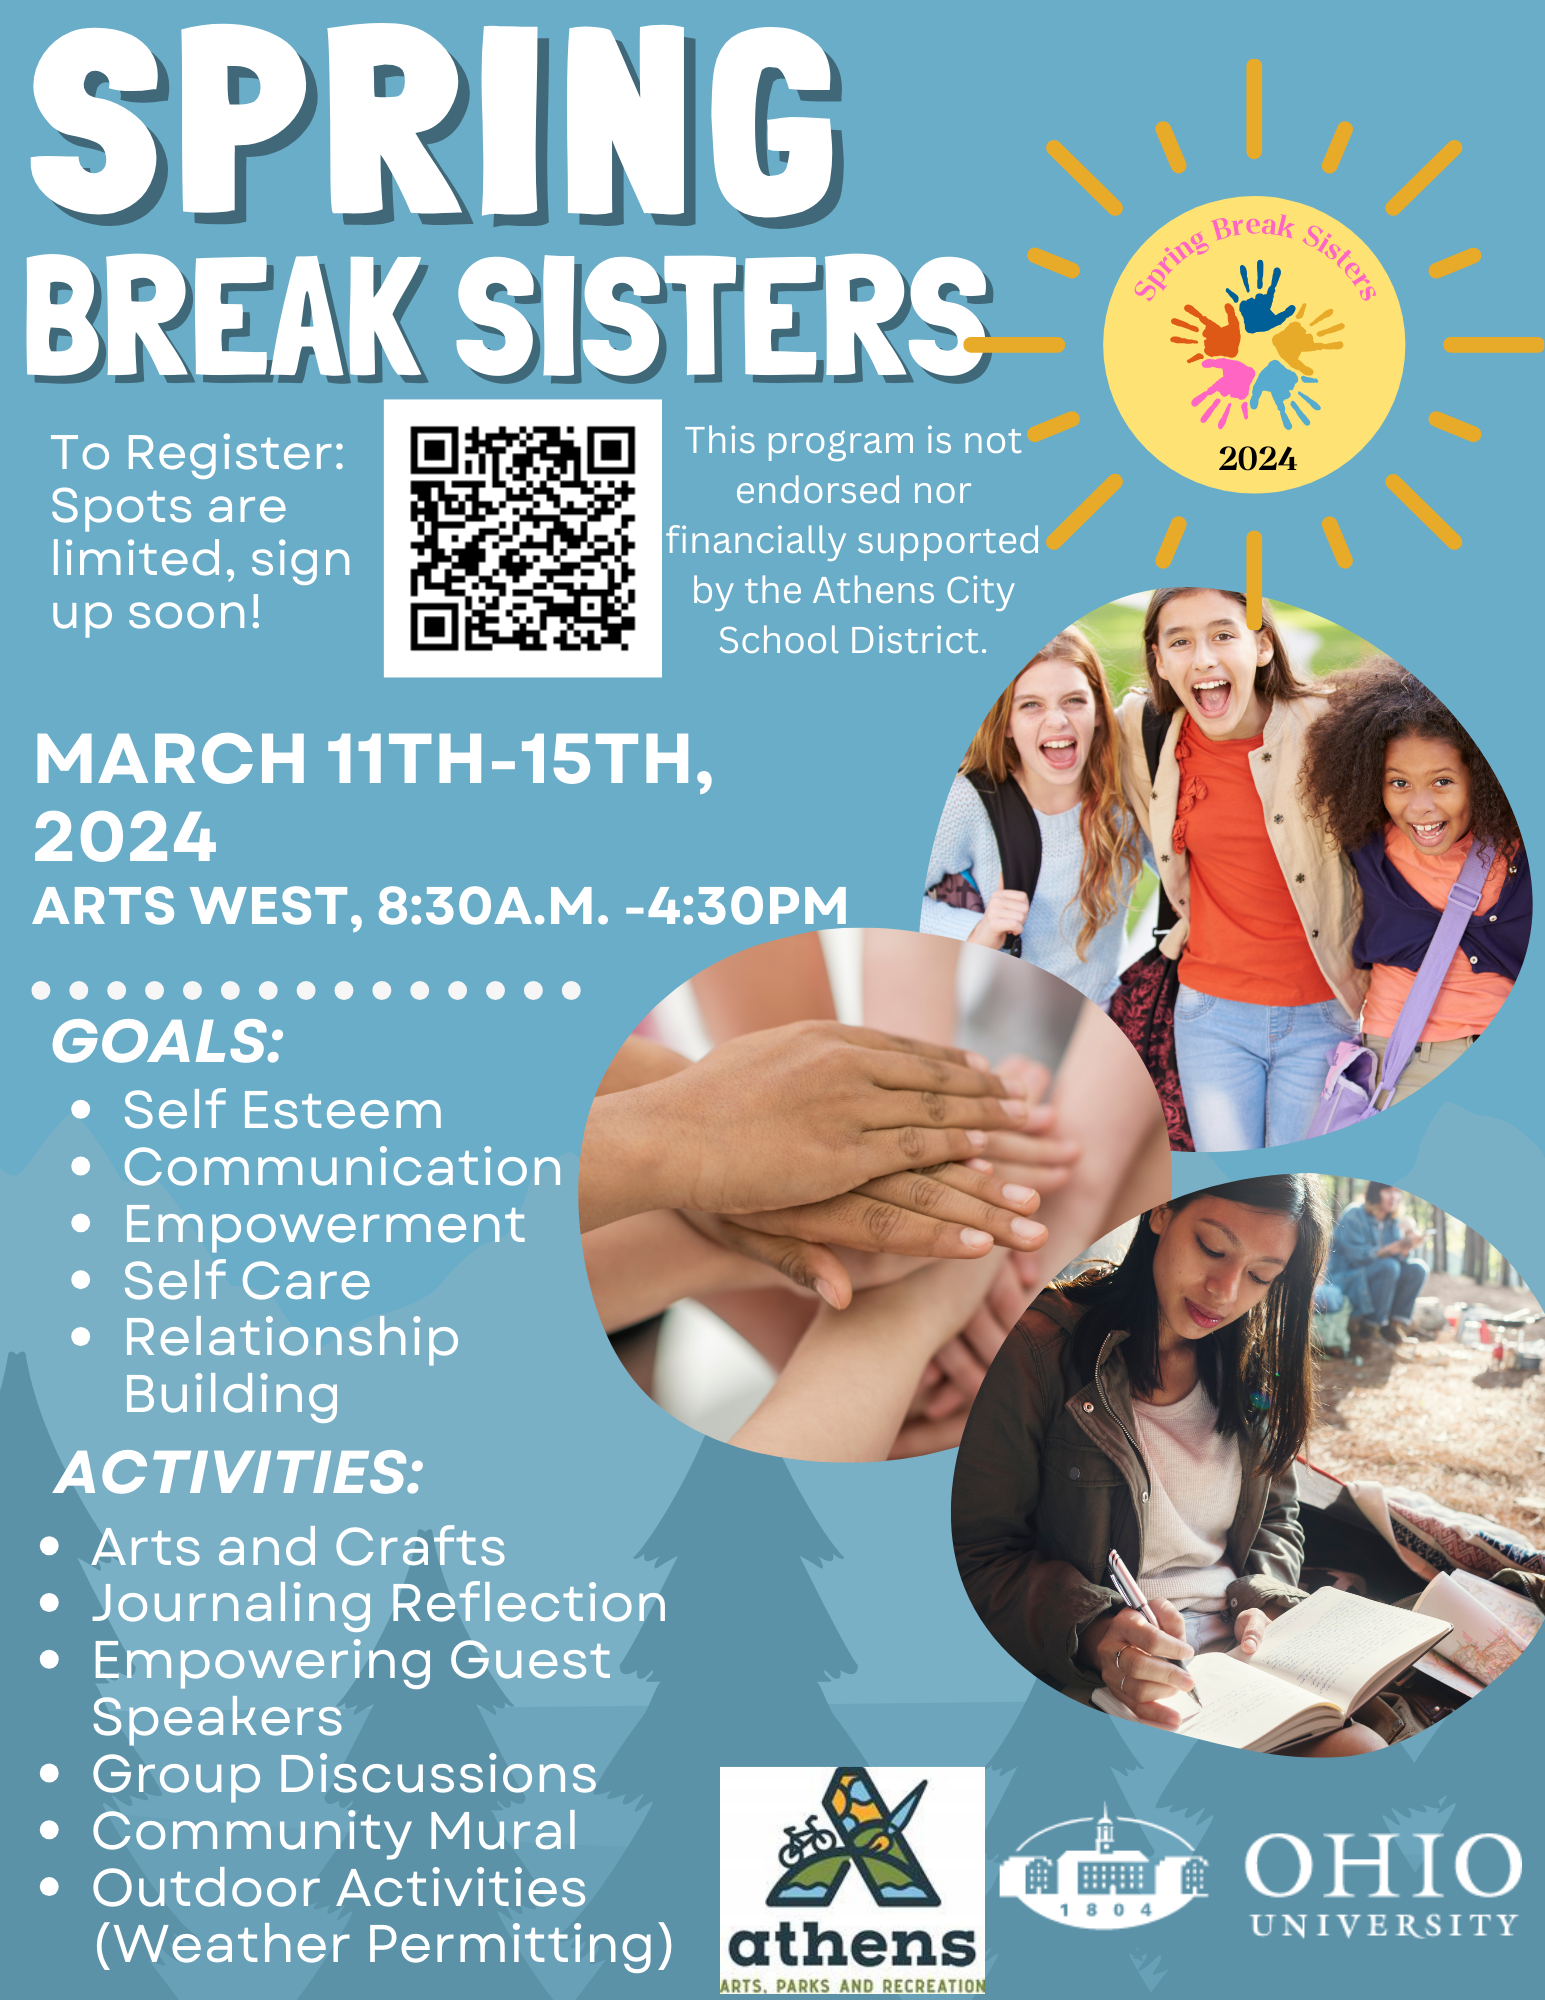 A flyer for the Spring Break Sisters program.